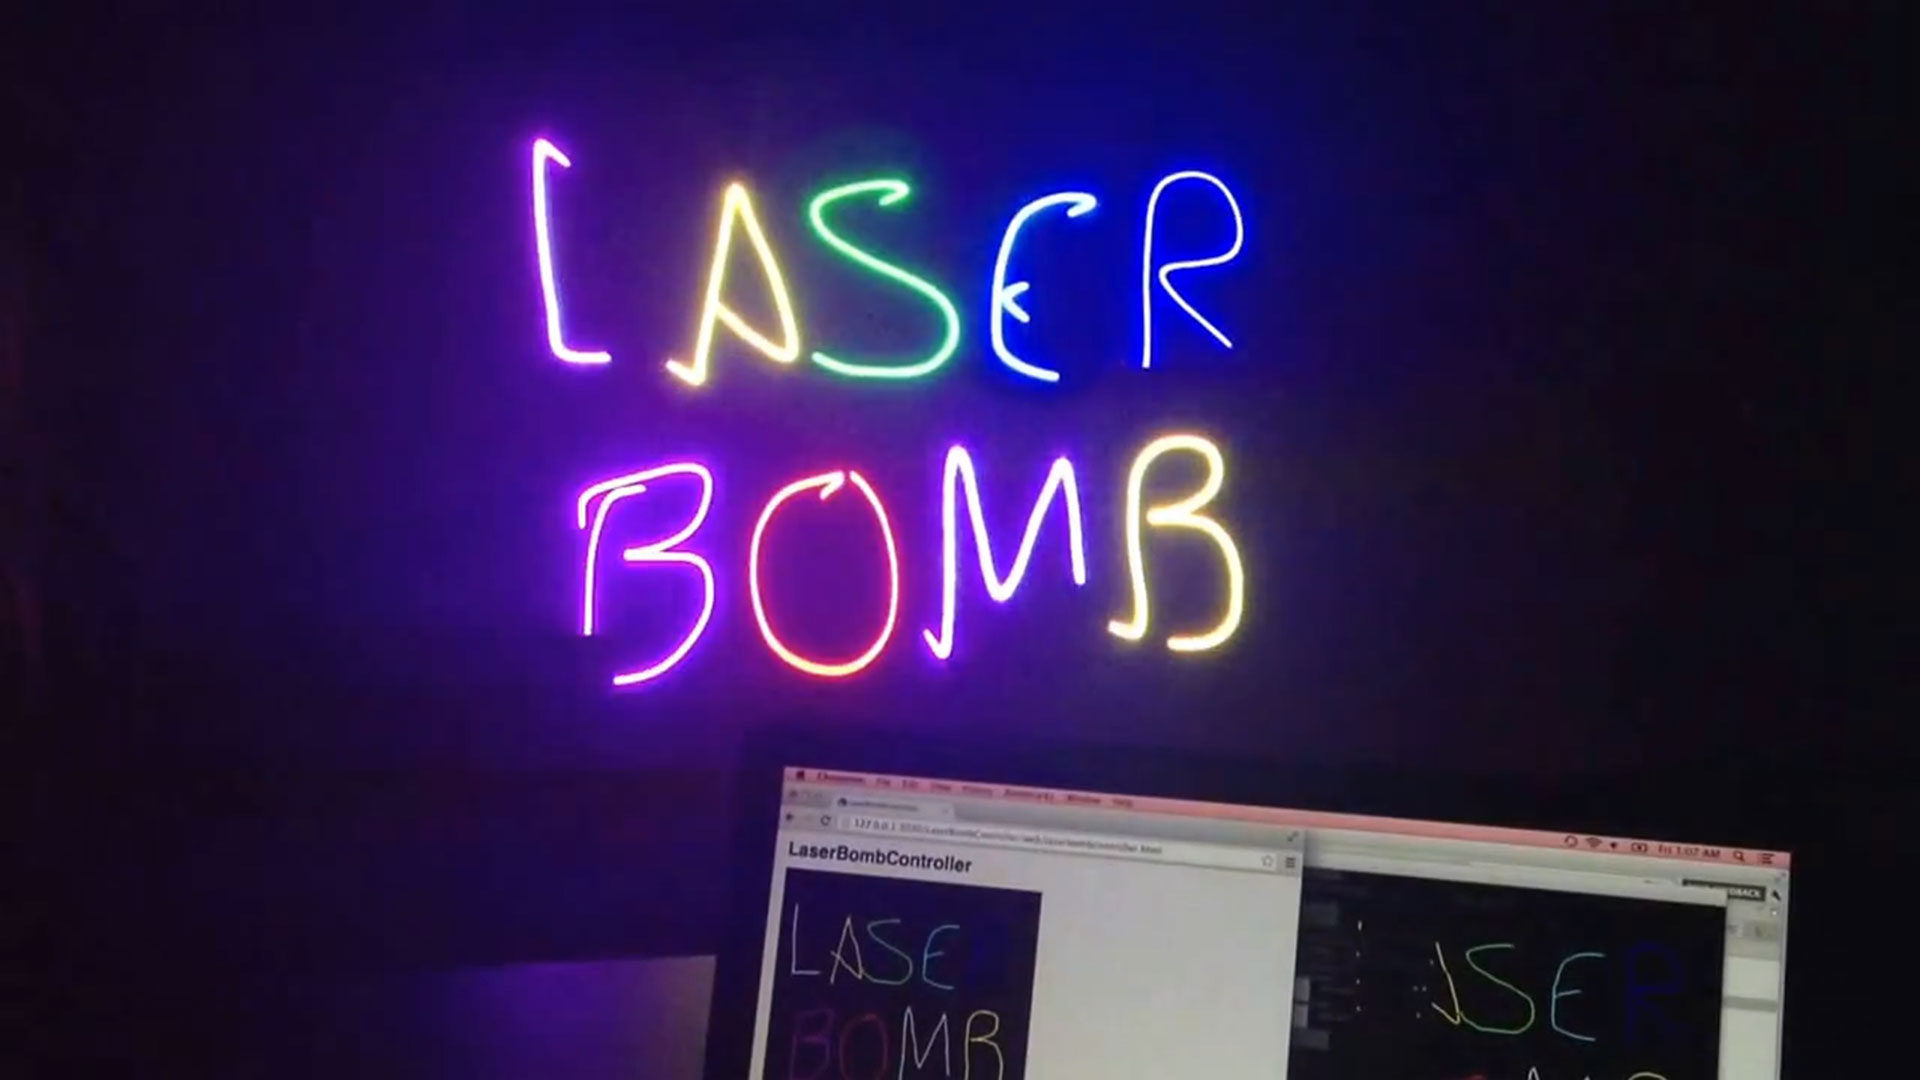 LaserBomb